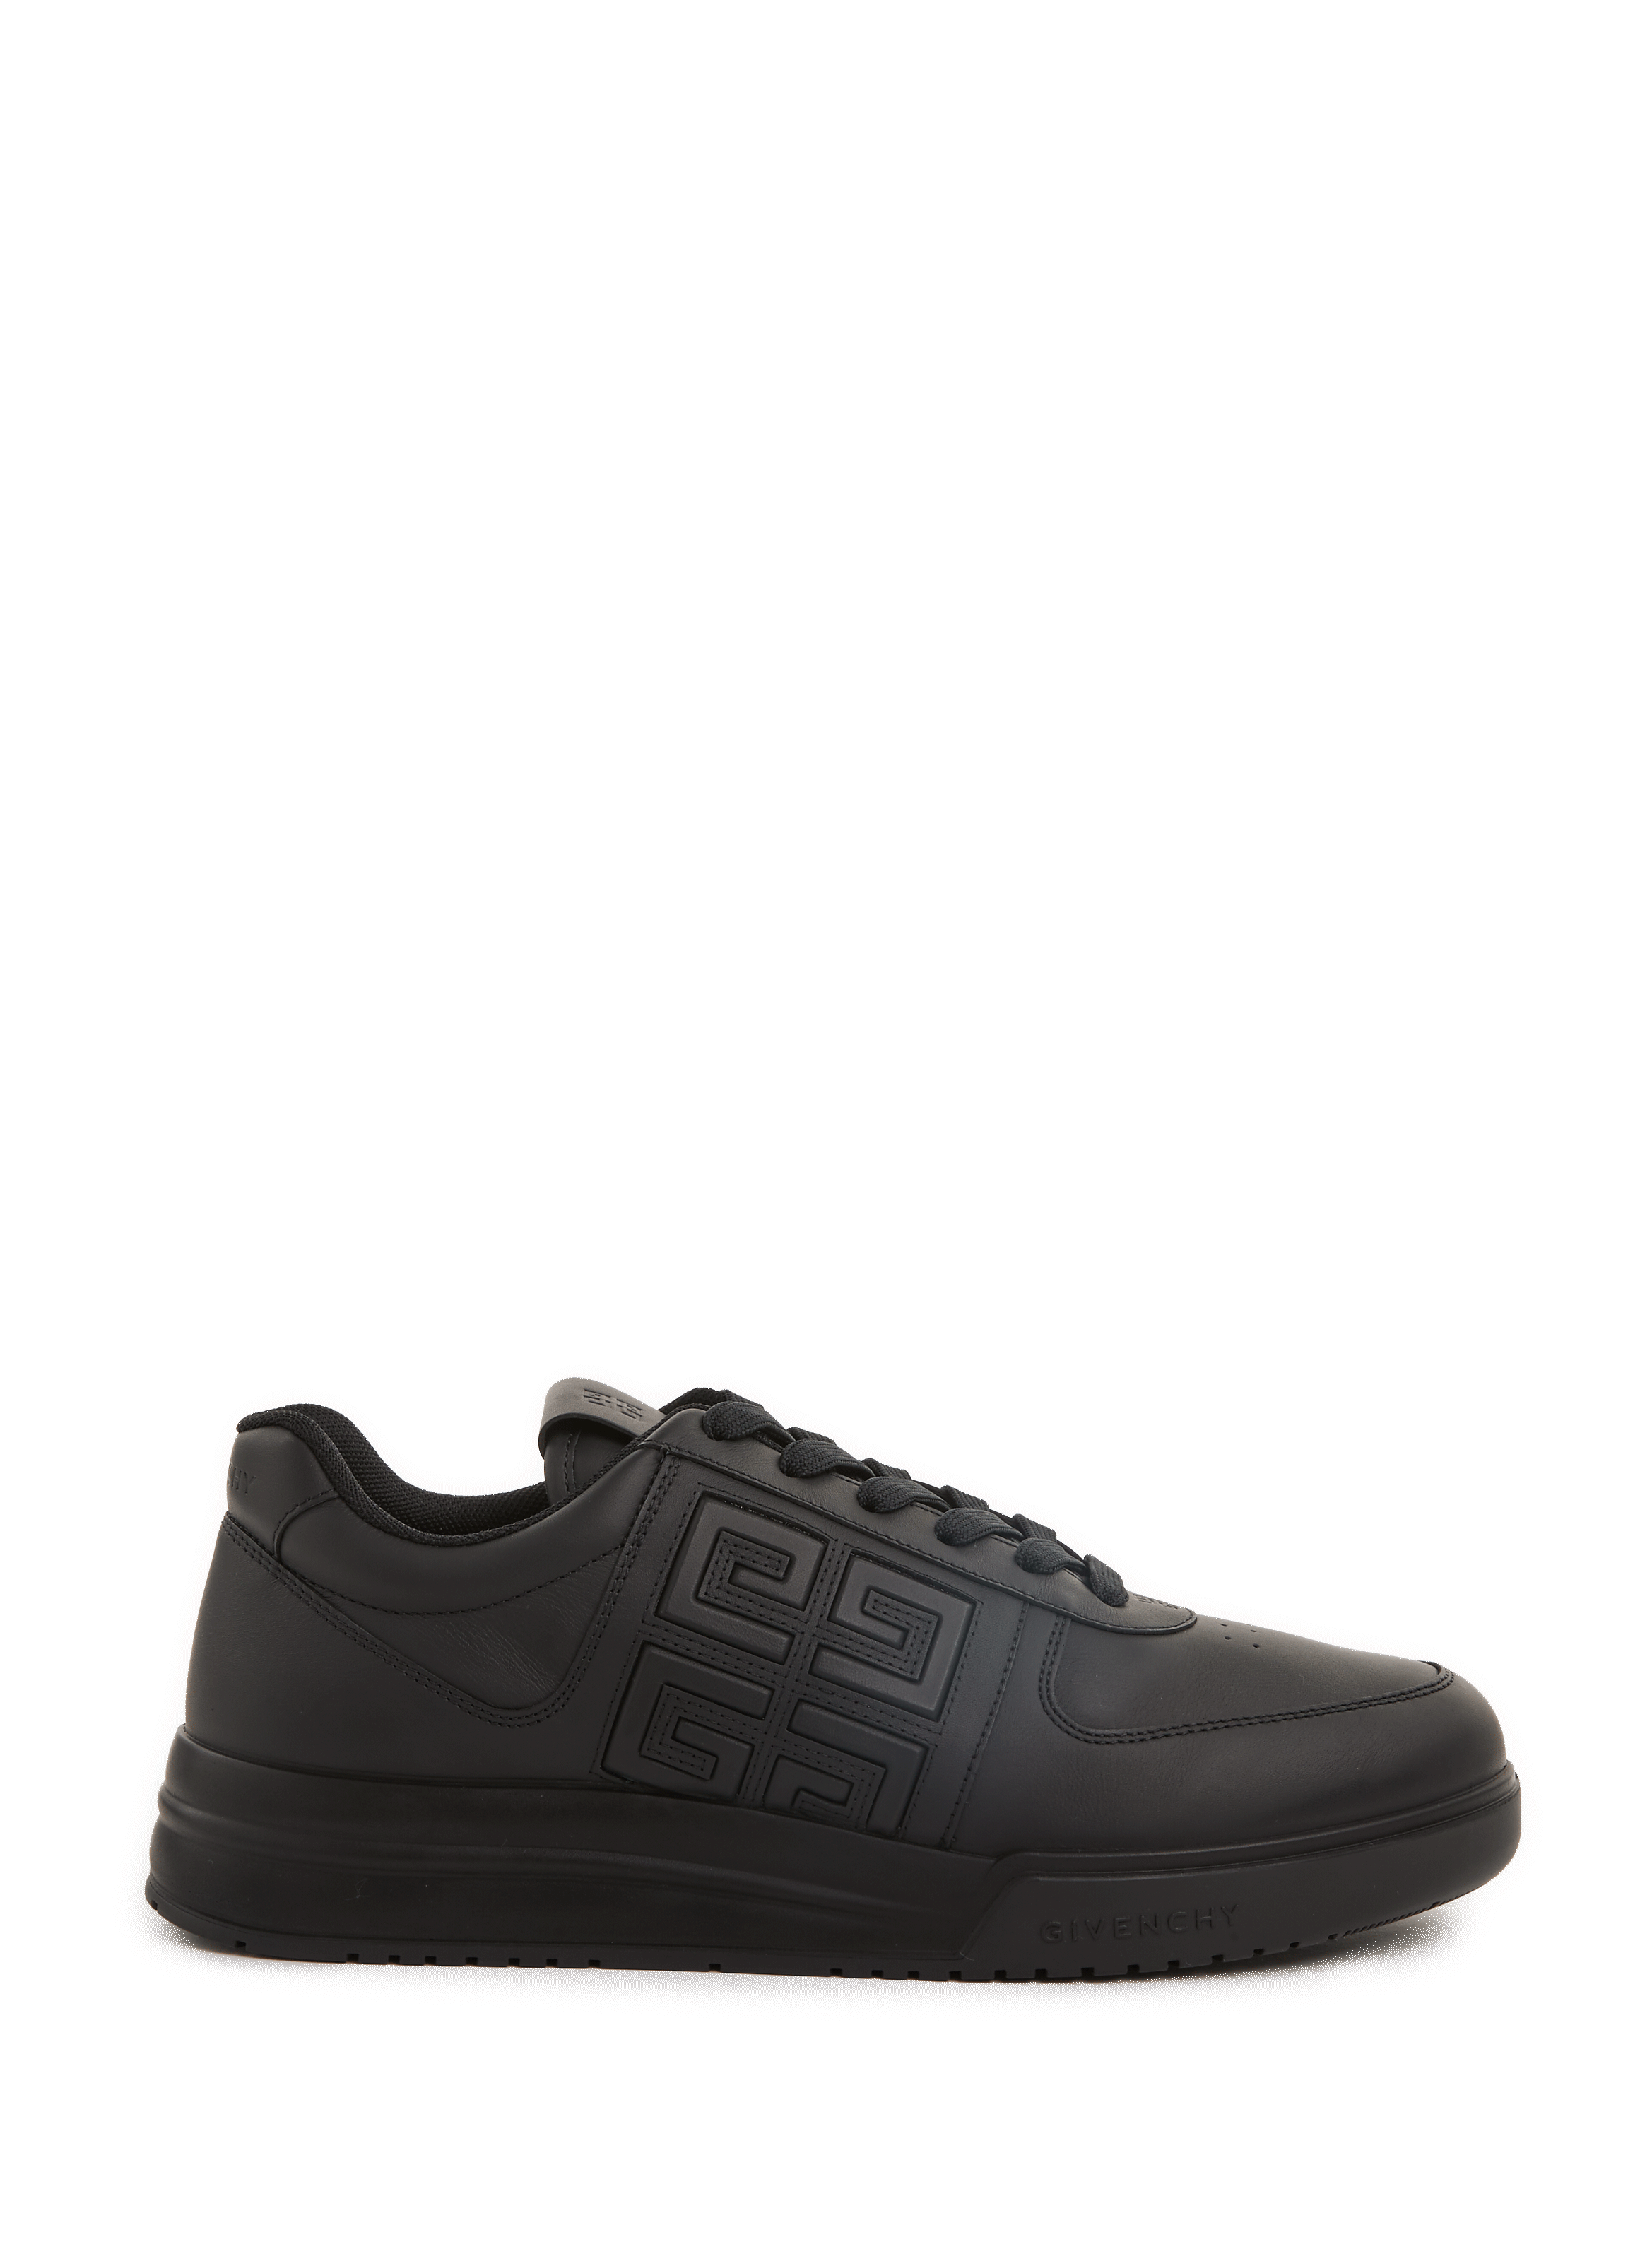 Givenchy - Urban Street logo-print leather slip-on sneakers | Sepatu,  Wanita, Mode